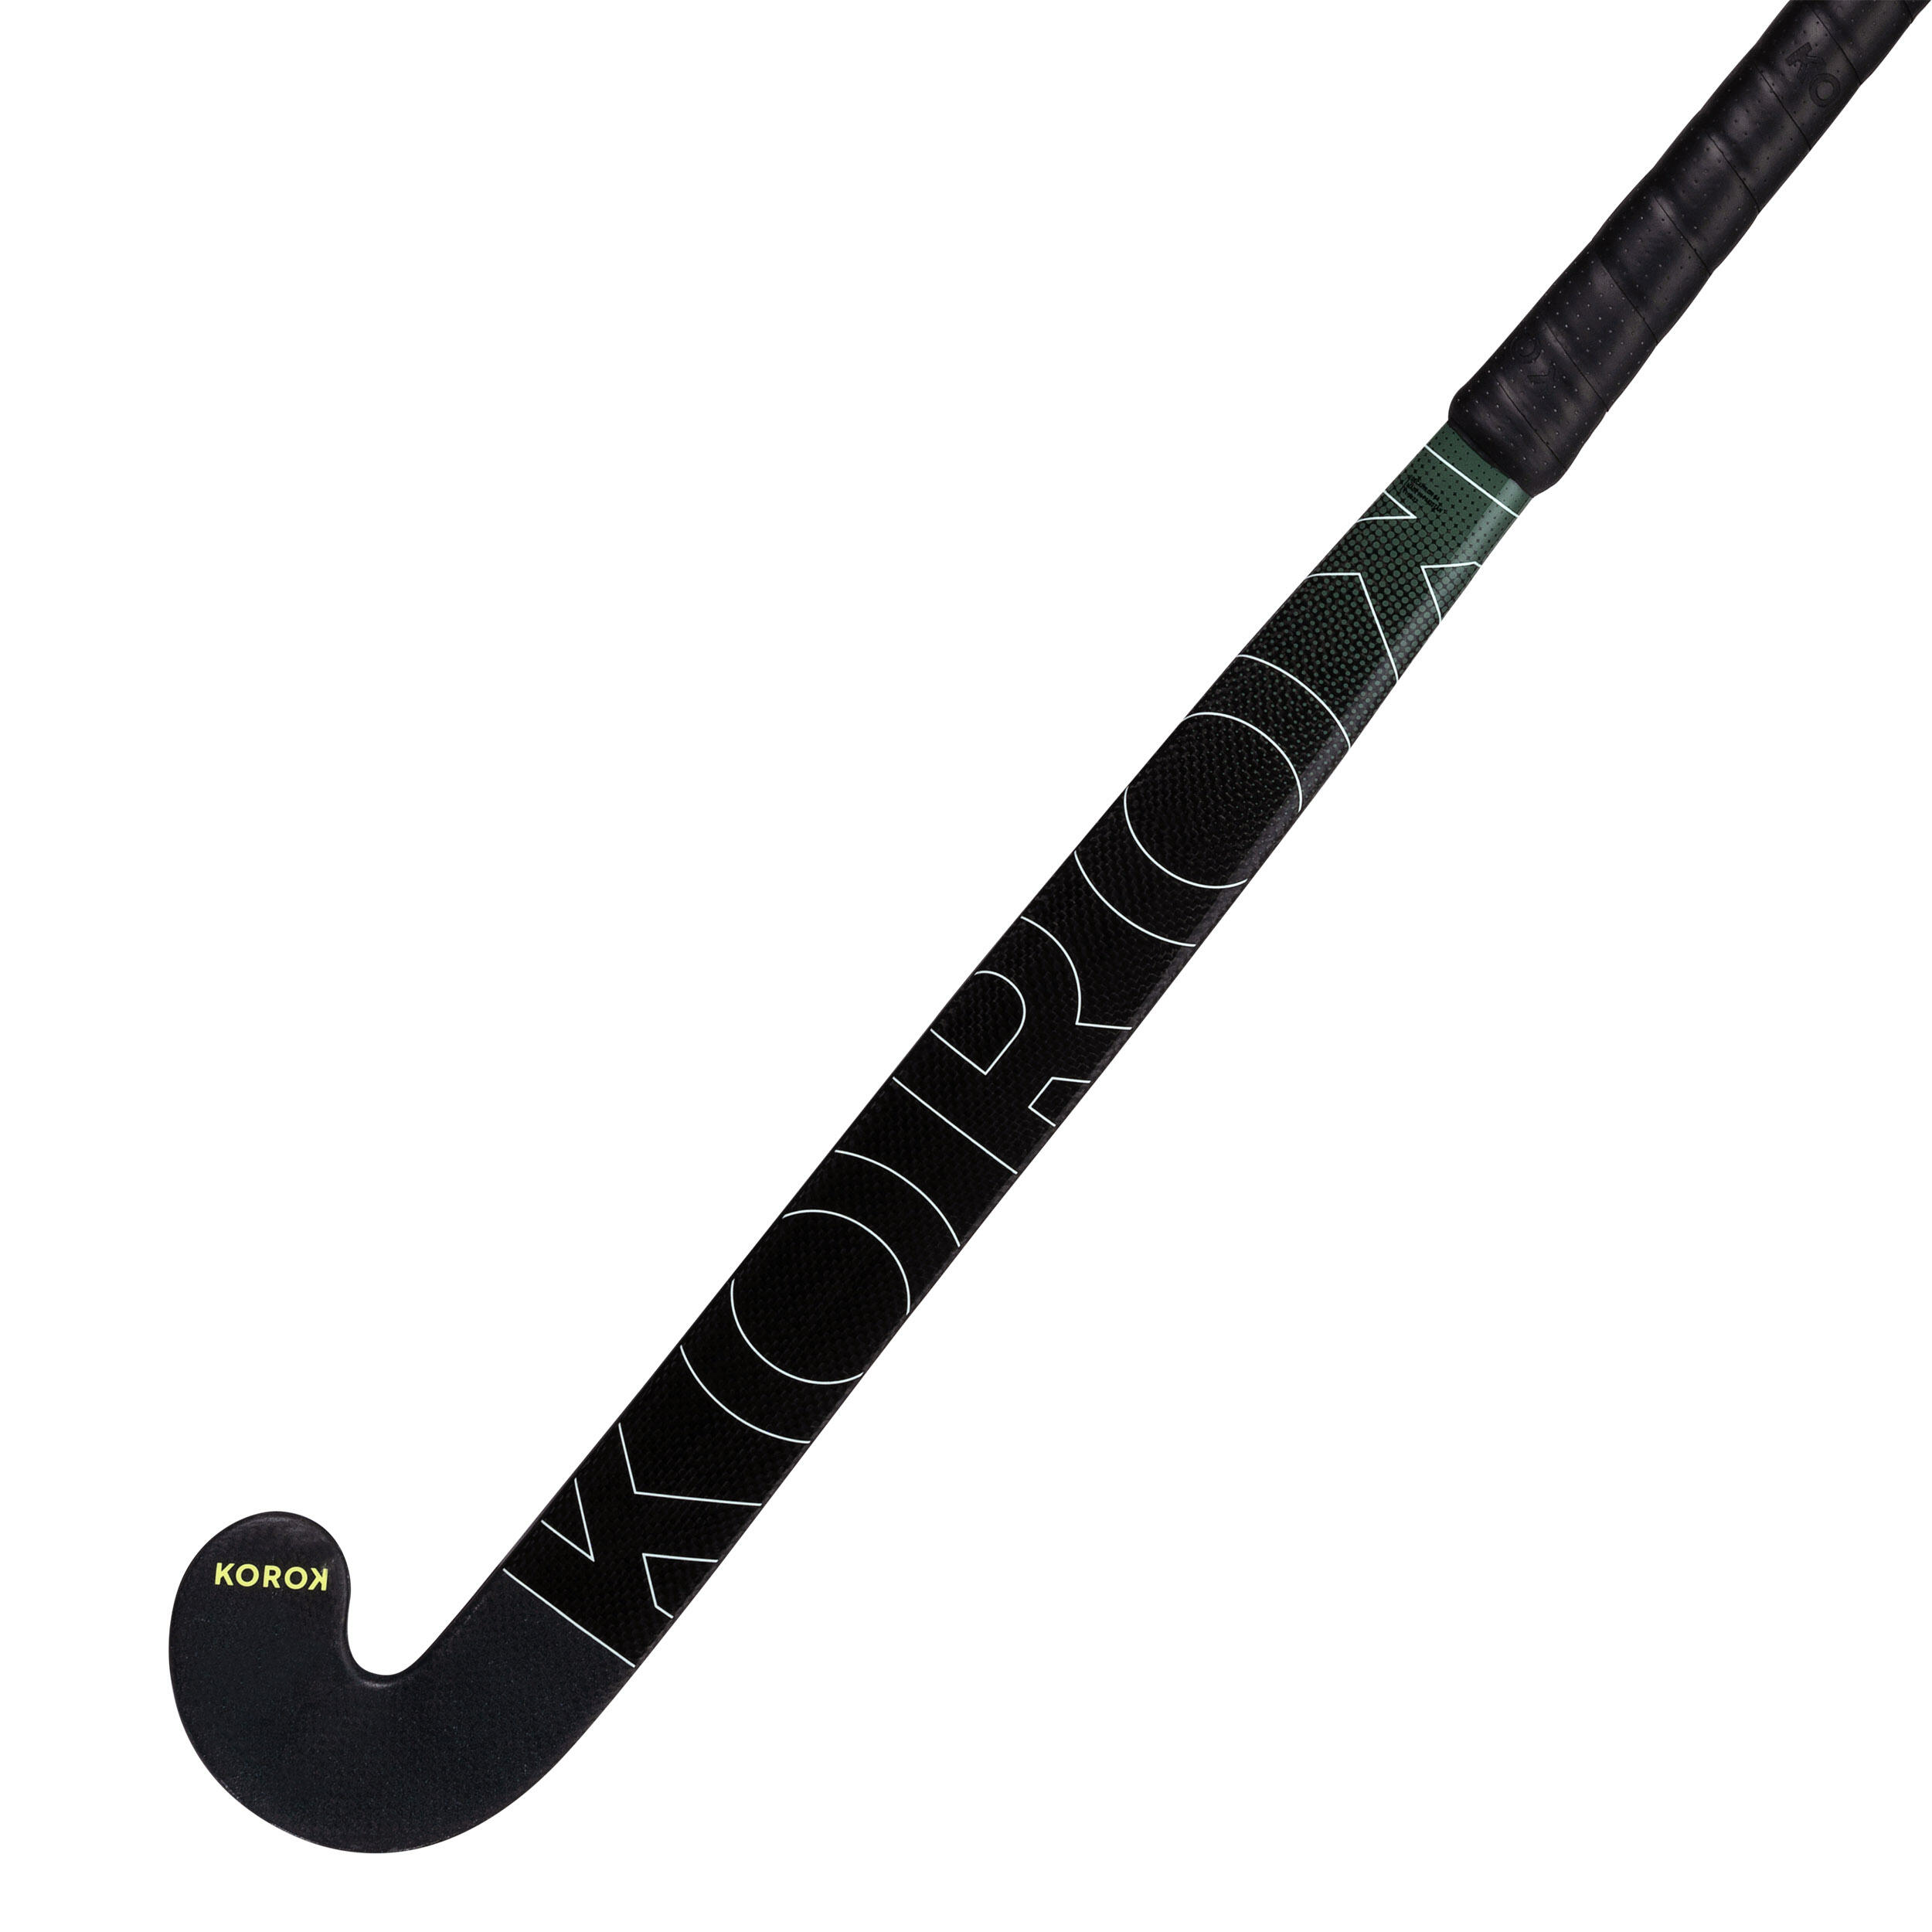 Adult Intermediate 60% Carbon Low Bow Field Hockey Stick FH560 - Black/Khaki 3/12